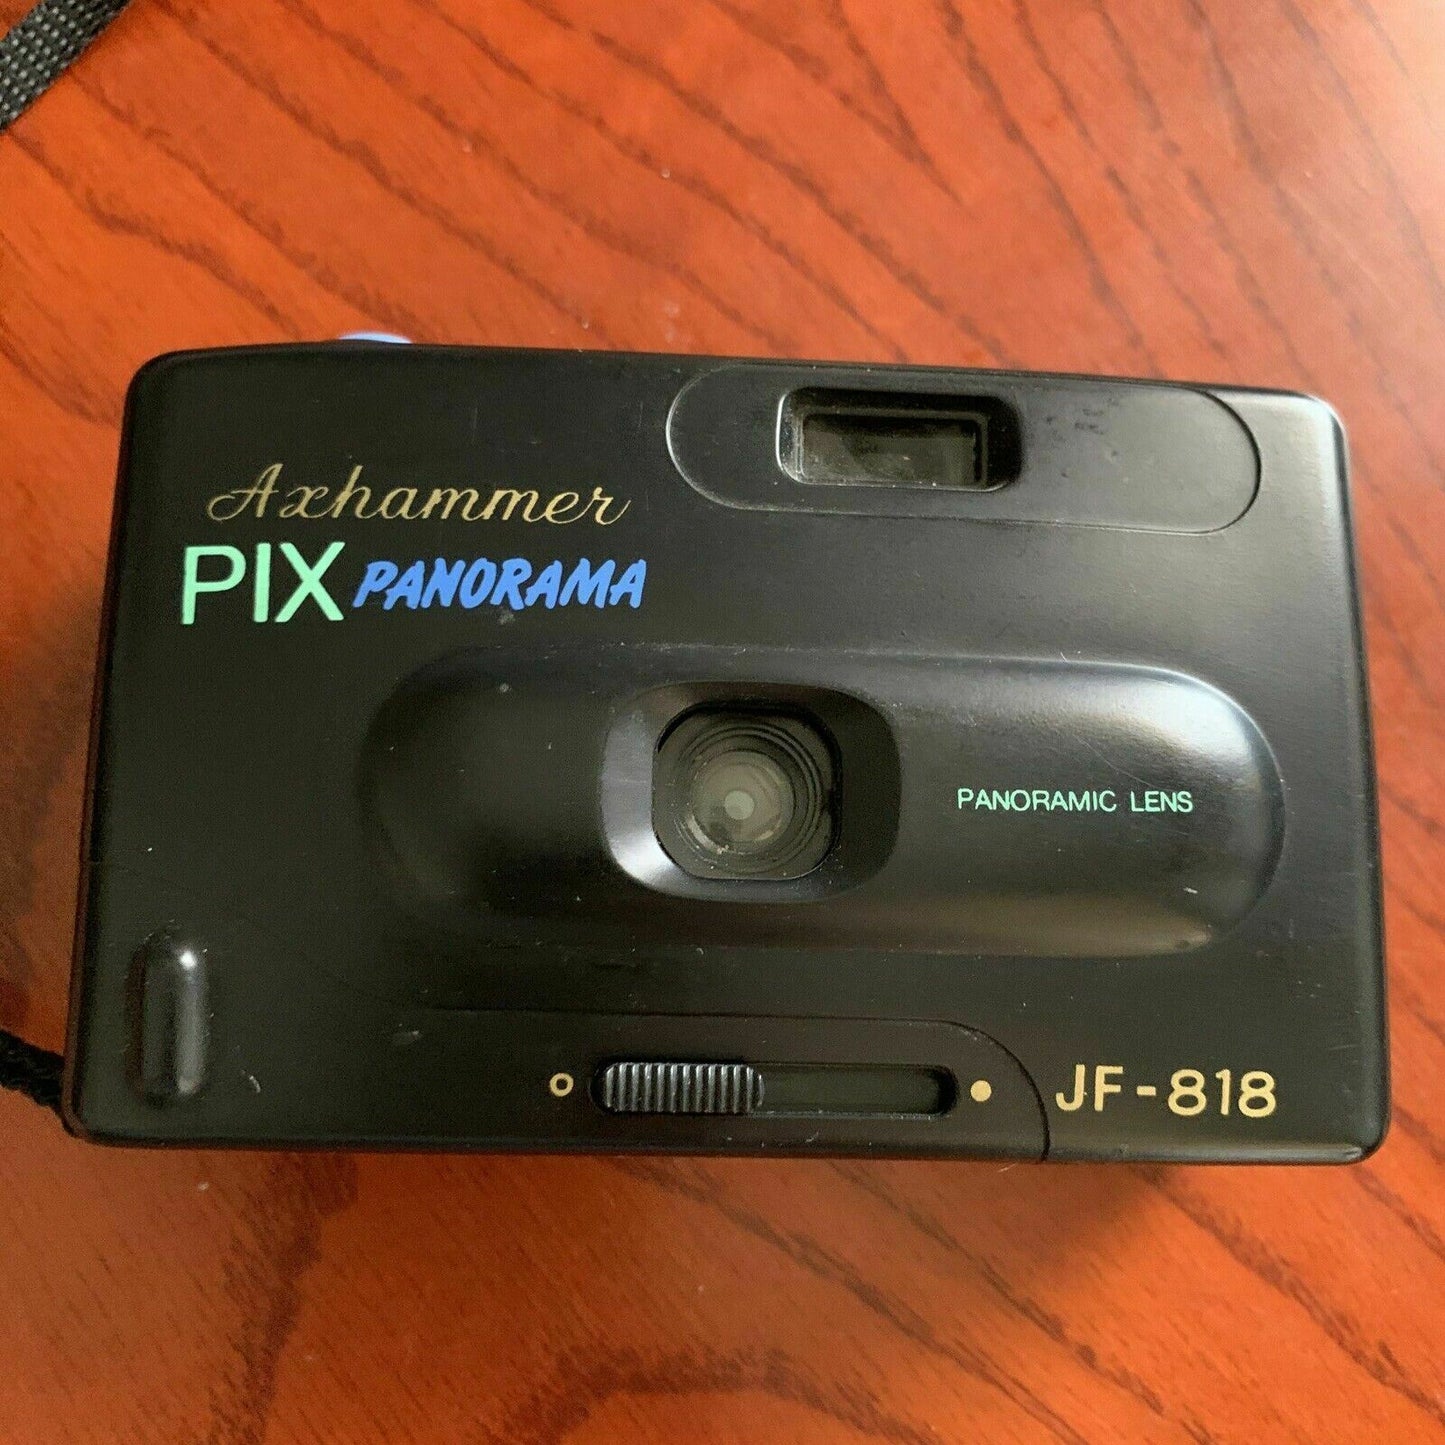 Axhammer PIX Panorama 35mm Film Camera JF-818 - Made in Japan